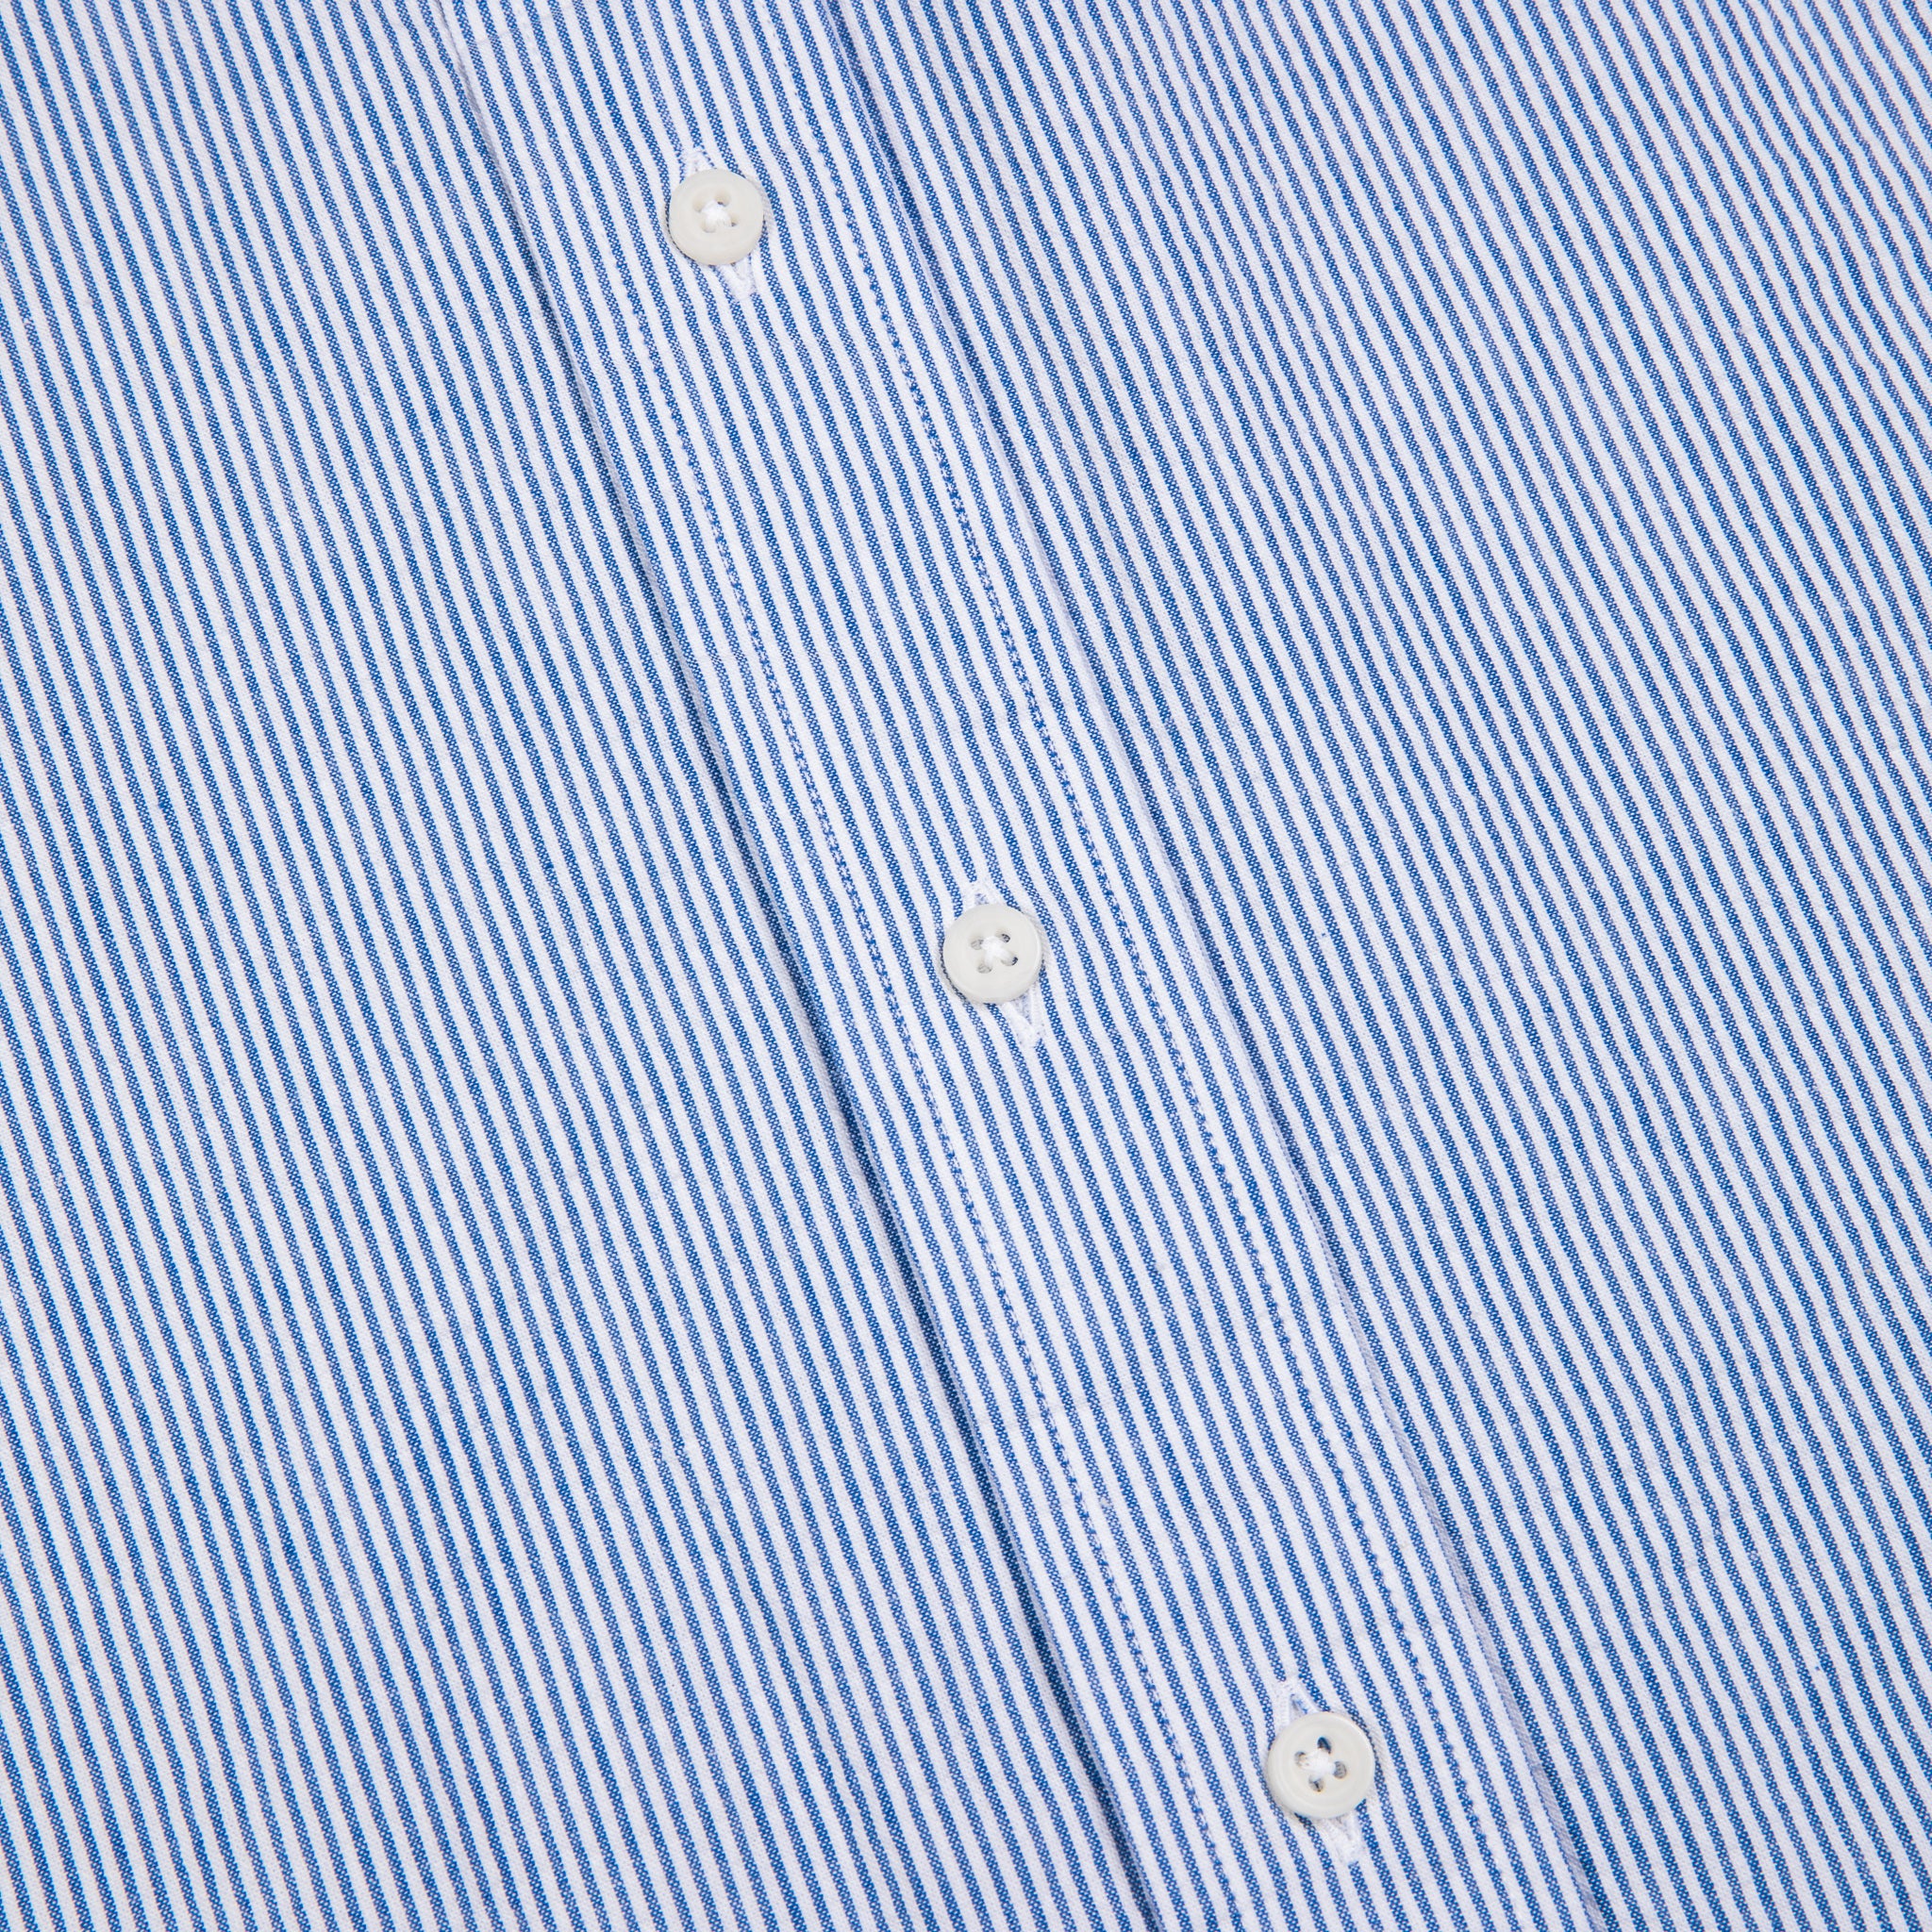 Gitman Vintage x Frans Boone Japanese woven stripe seersucker dark blue